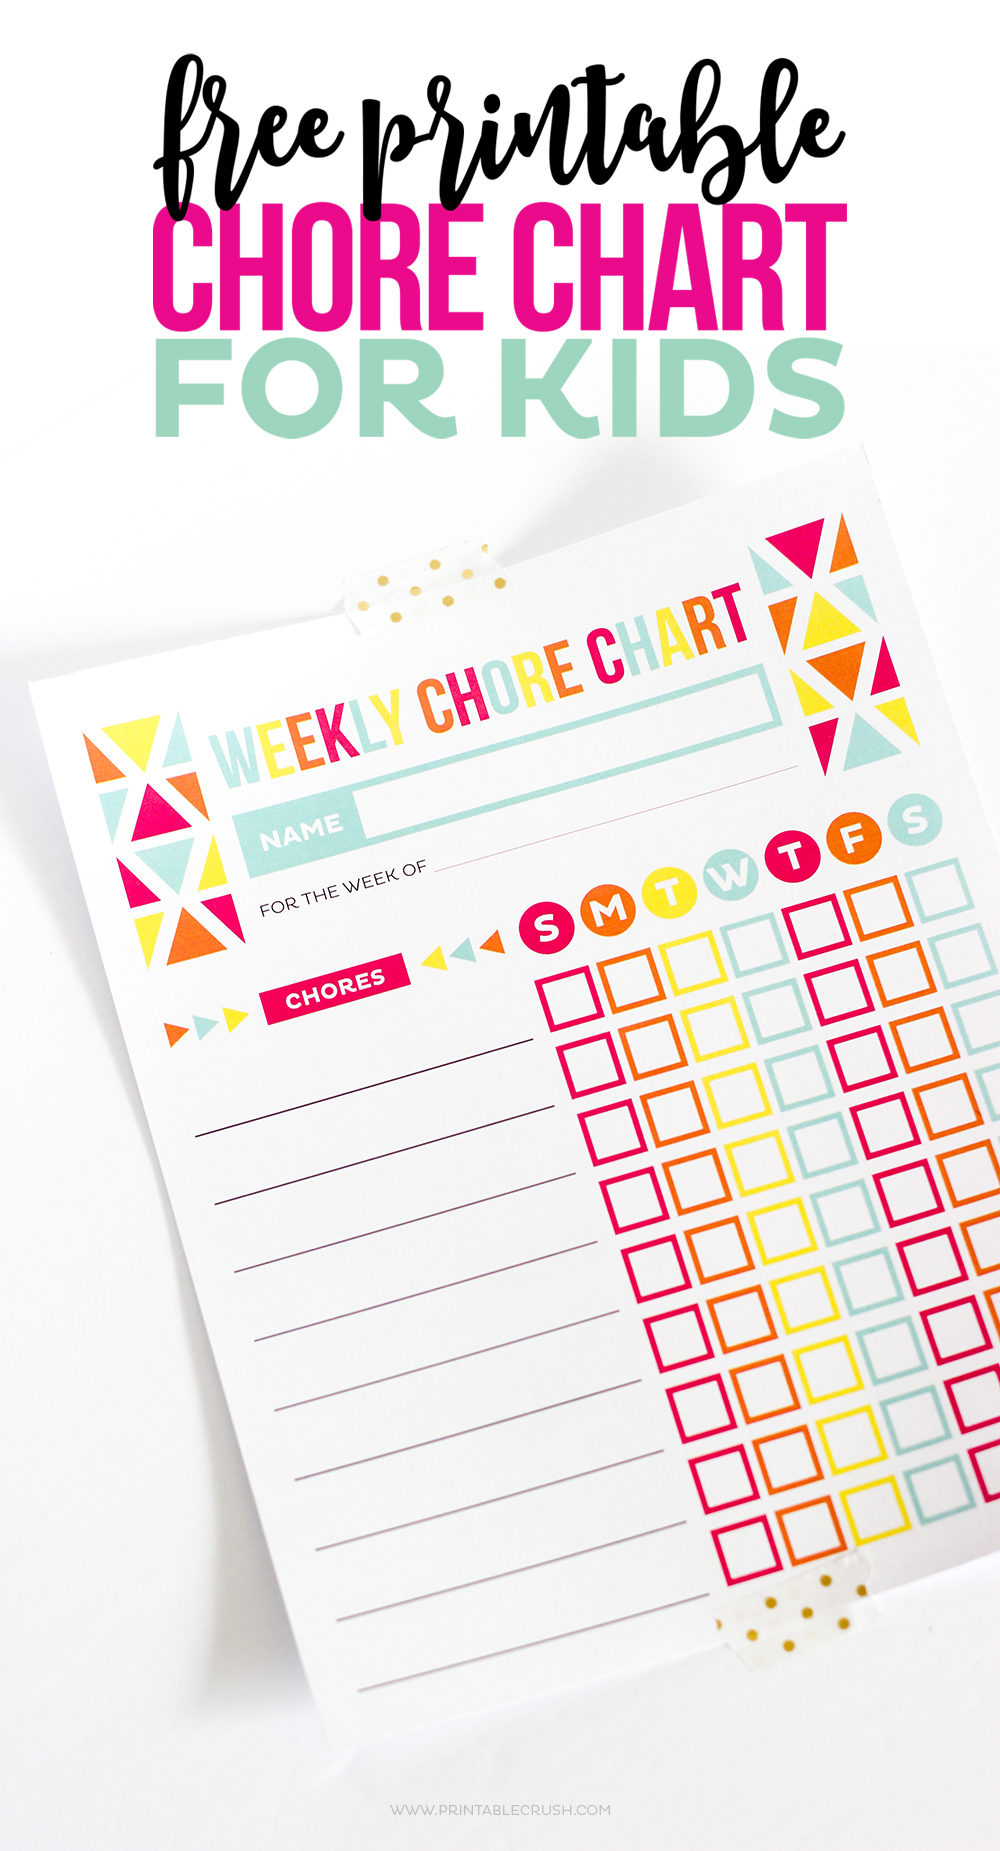 Download FREE Printable Chore Chart for Kids - Printable Crush